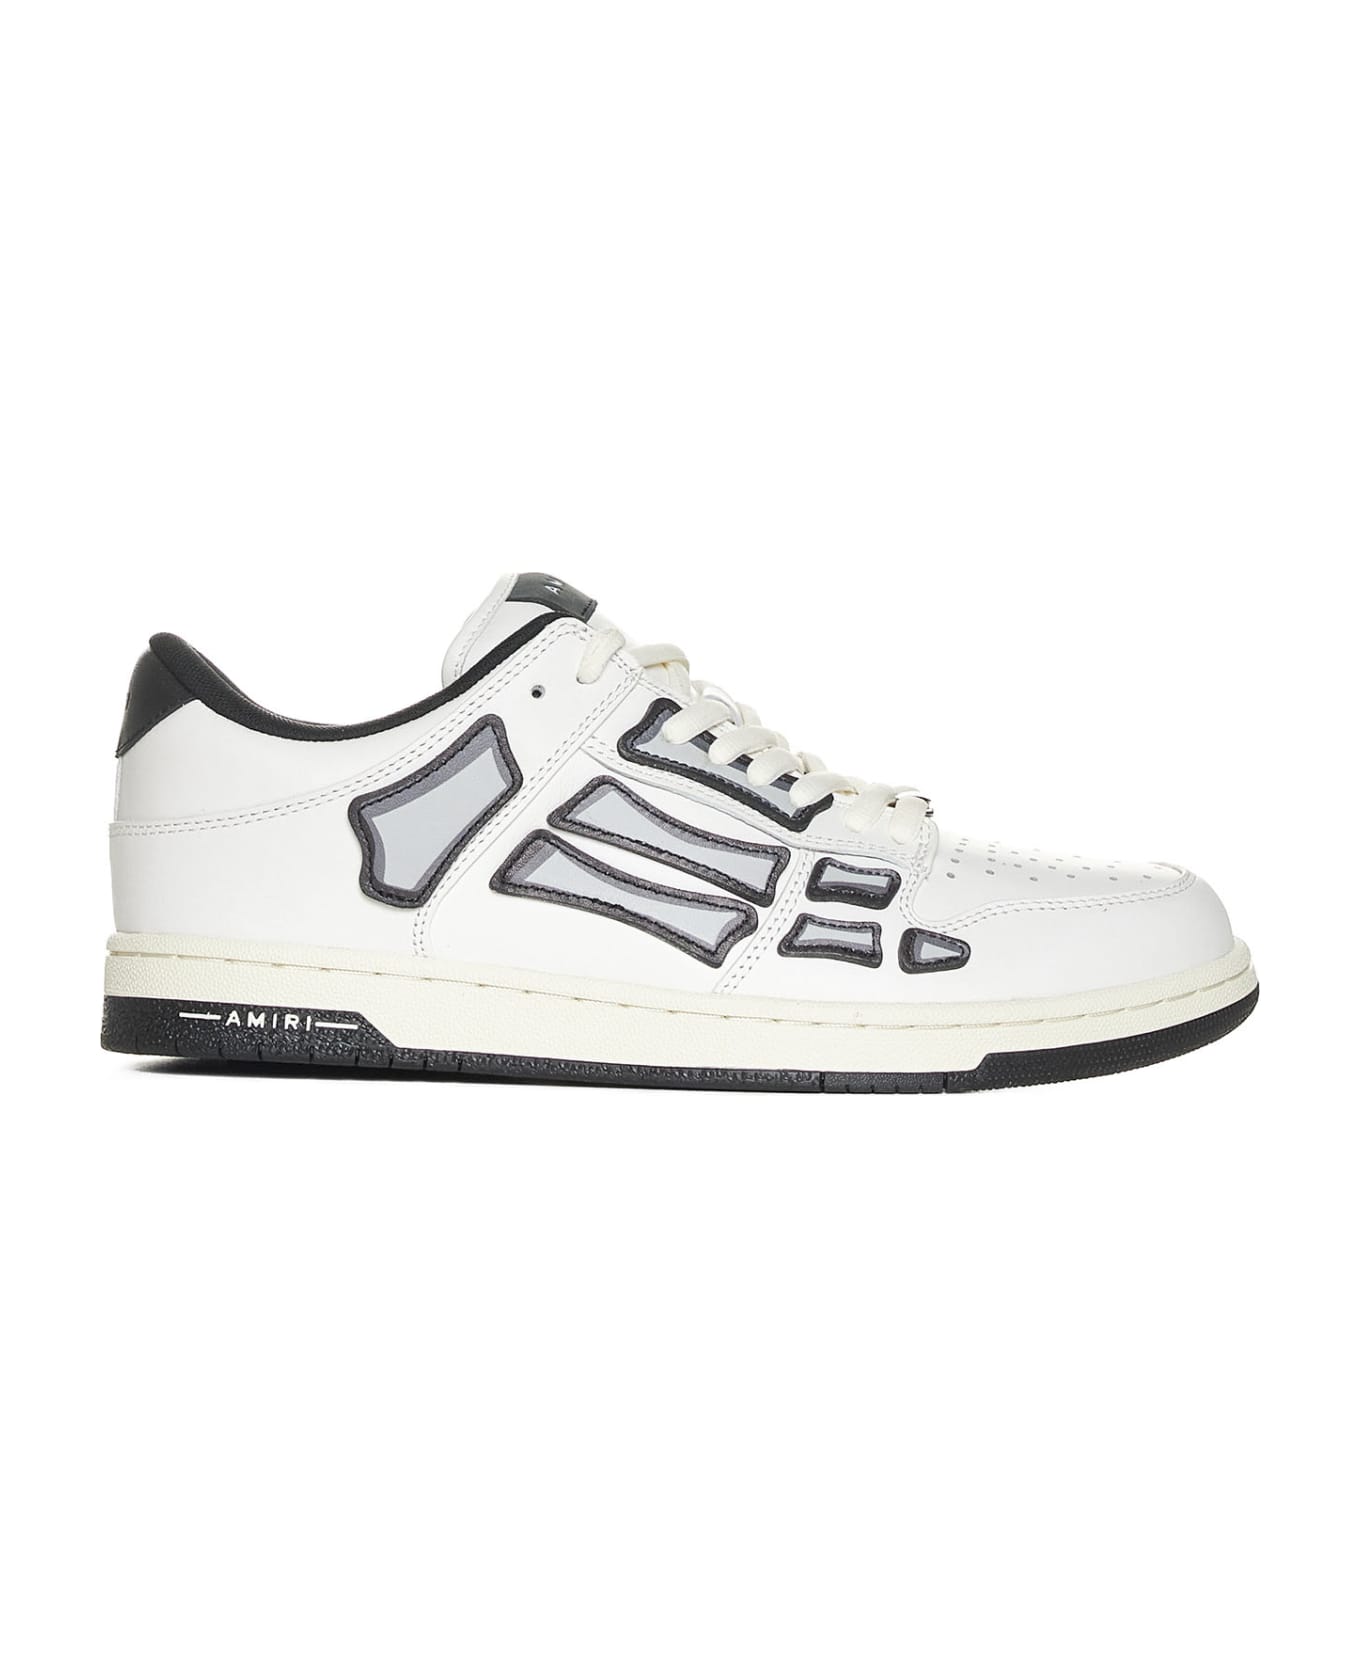 AMIRI Sneakers - White/black スニーカー